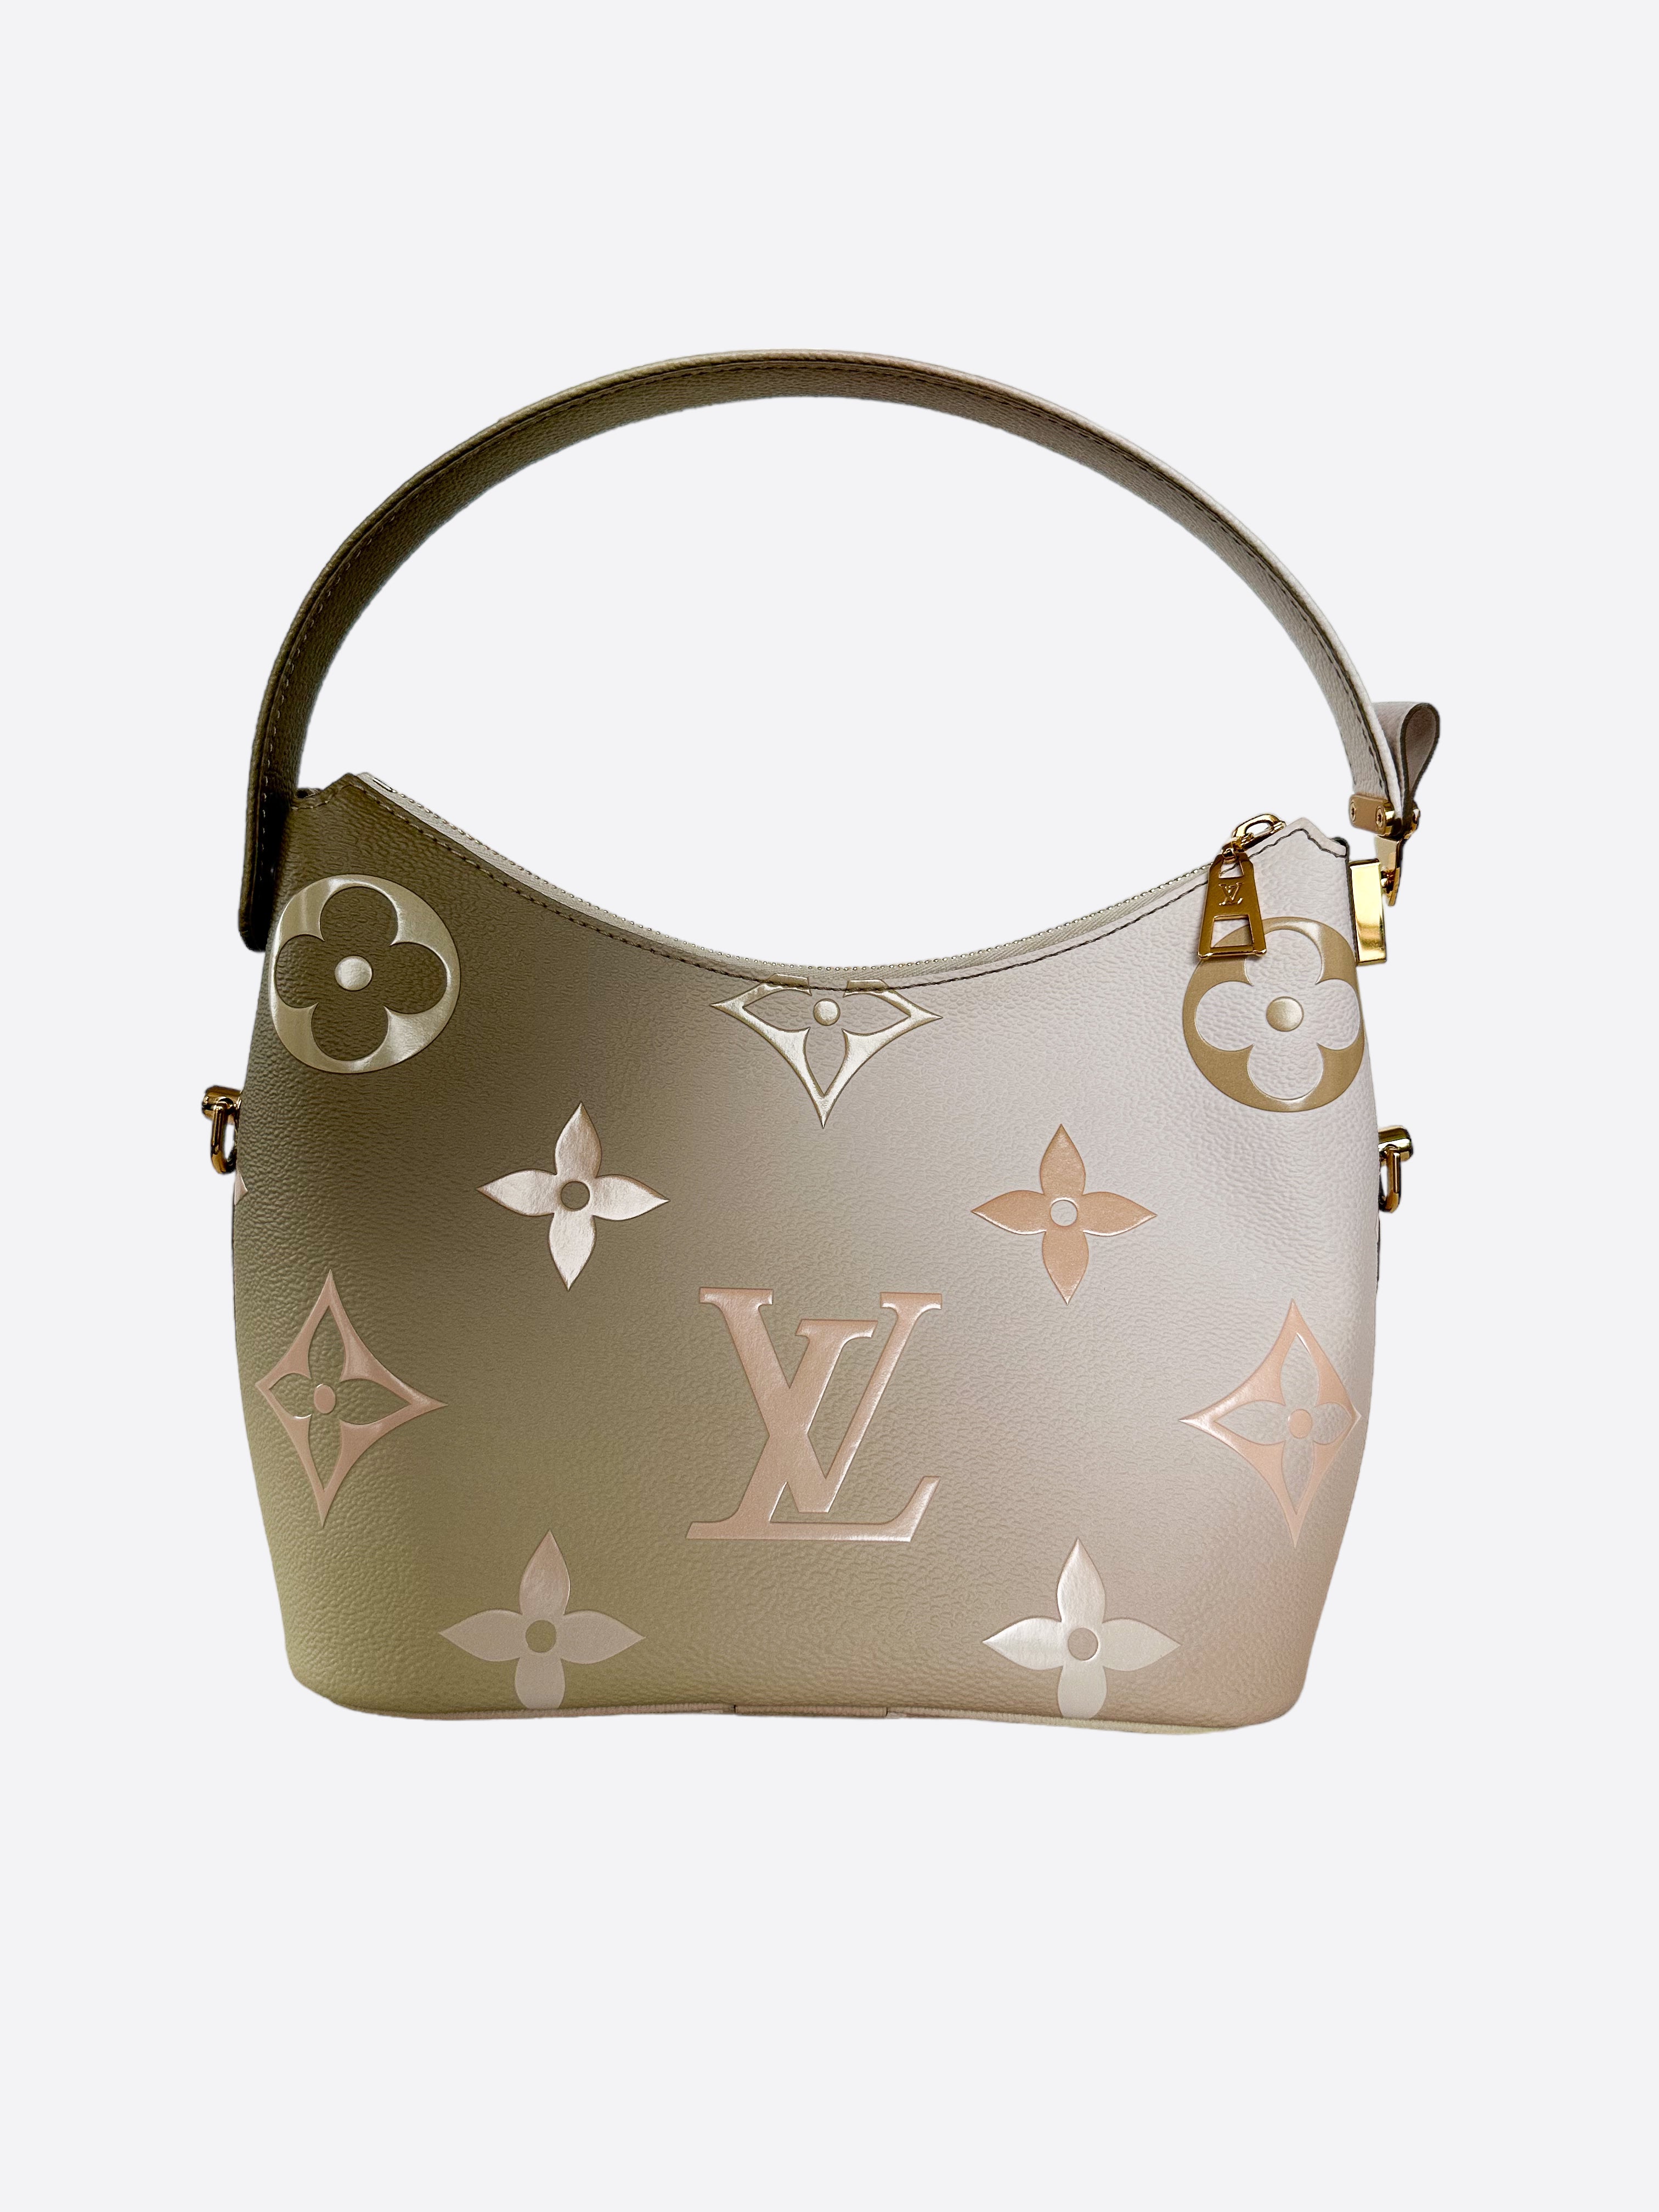 Louis Vuitton Supreme Box Logo Tee – Savonches